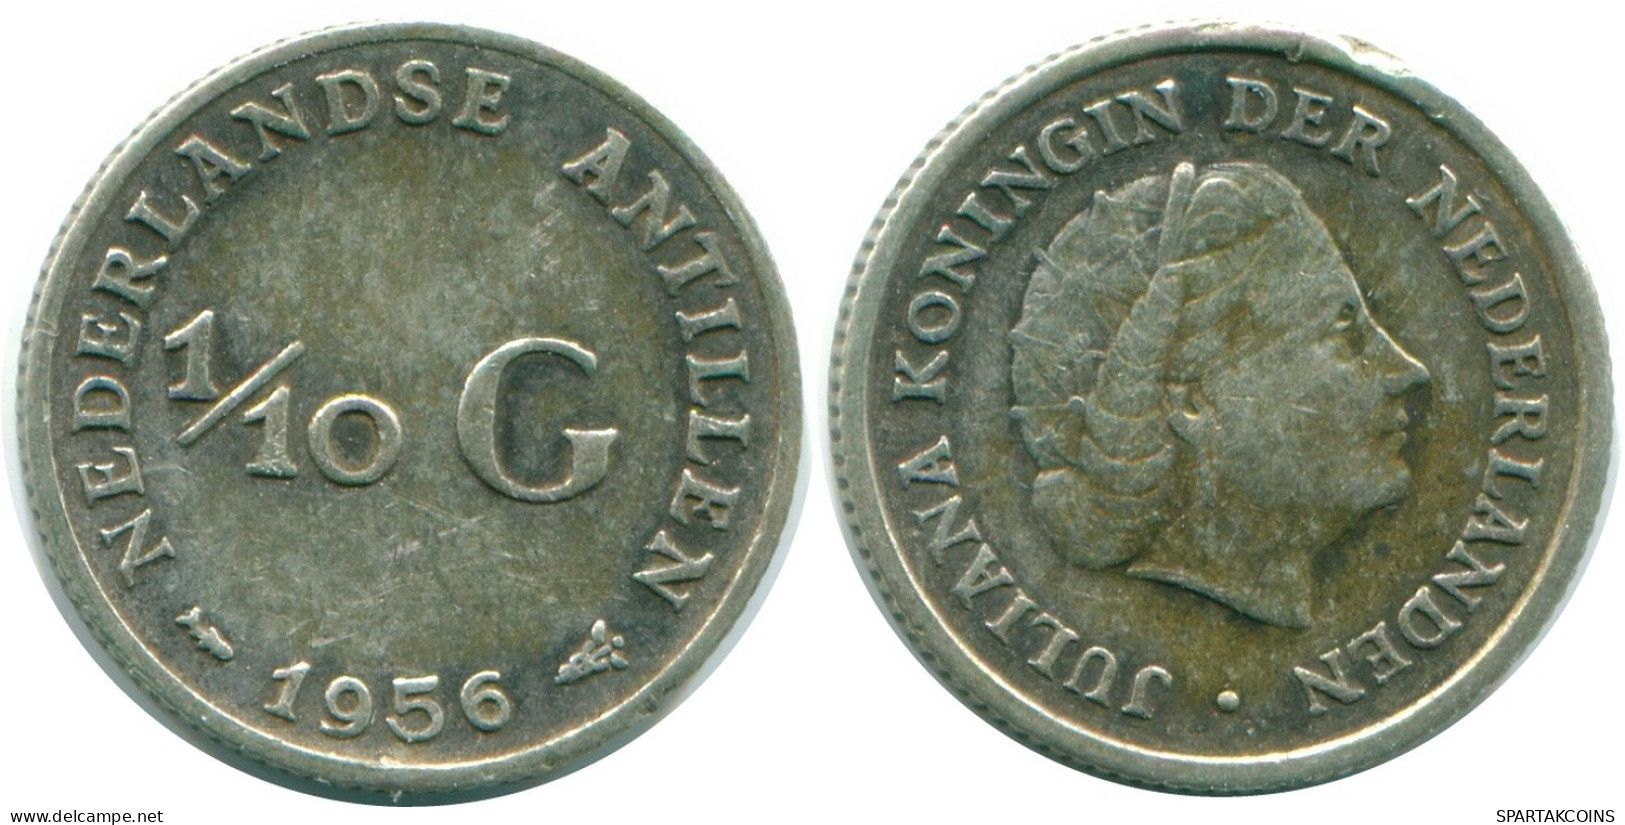 1/10 GULDEN 1956 NIEDERLÄNDISCHE ANTILLEN SILBER Koloniale Münze #NL12098.3.D.A - Netherlands Antilles